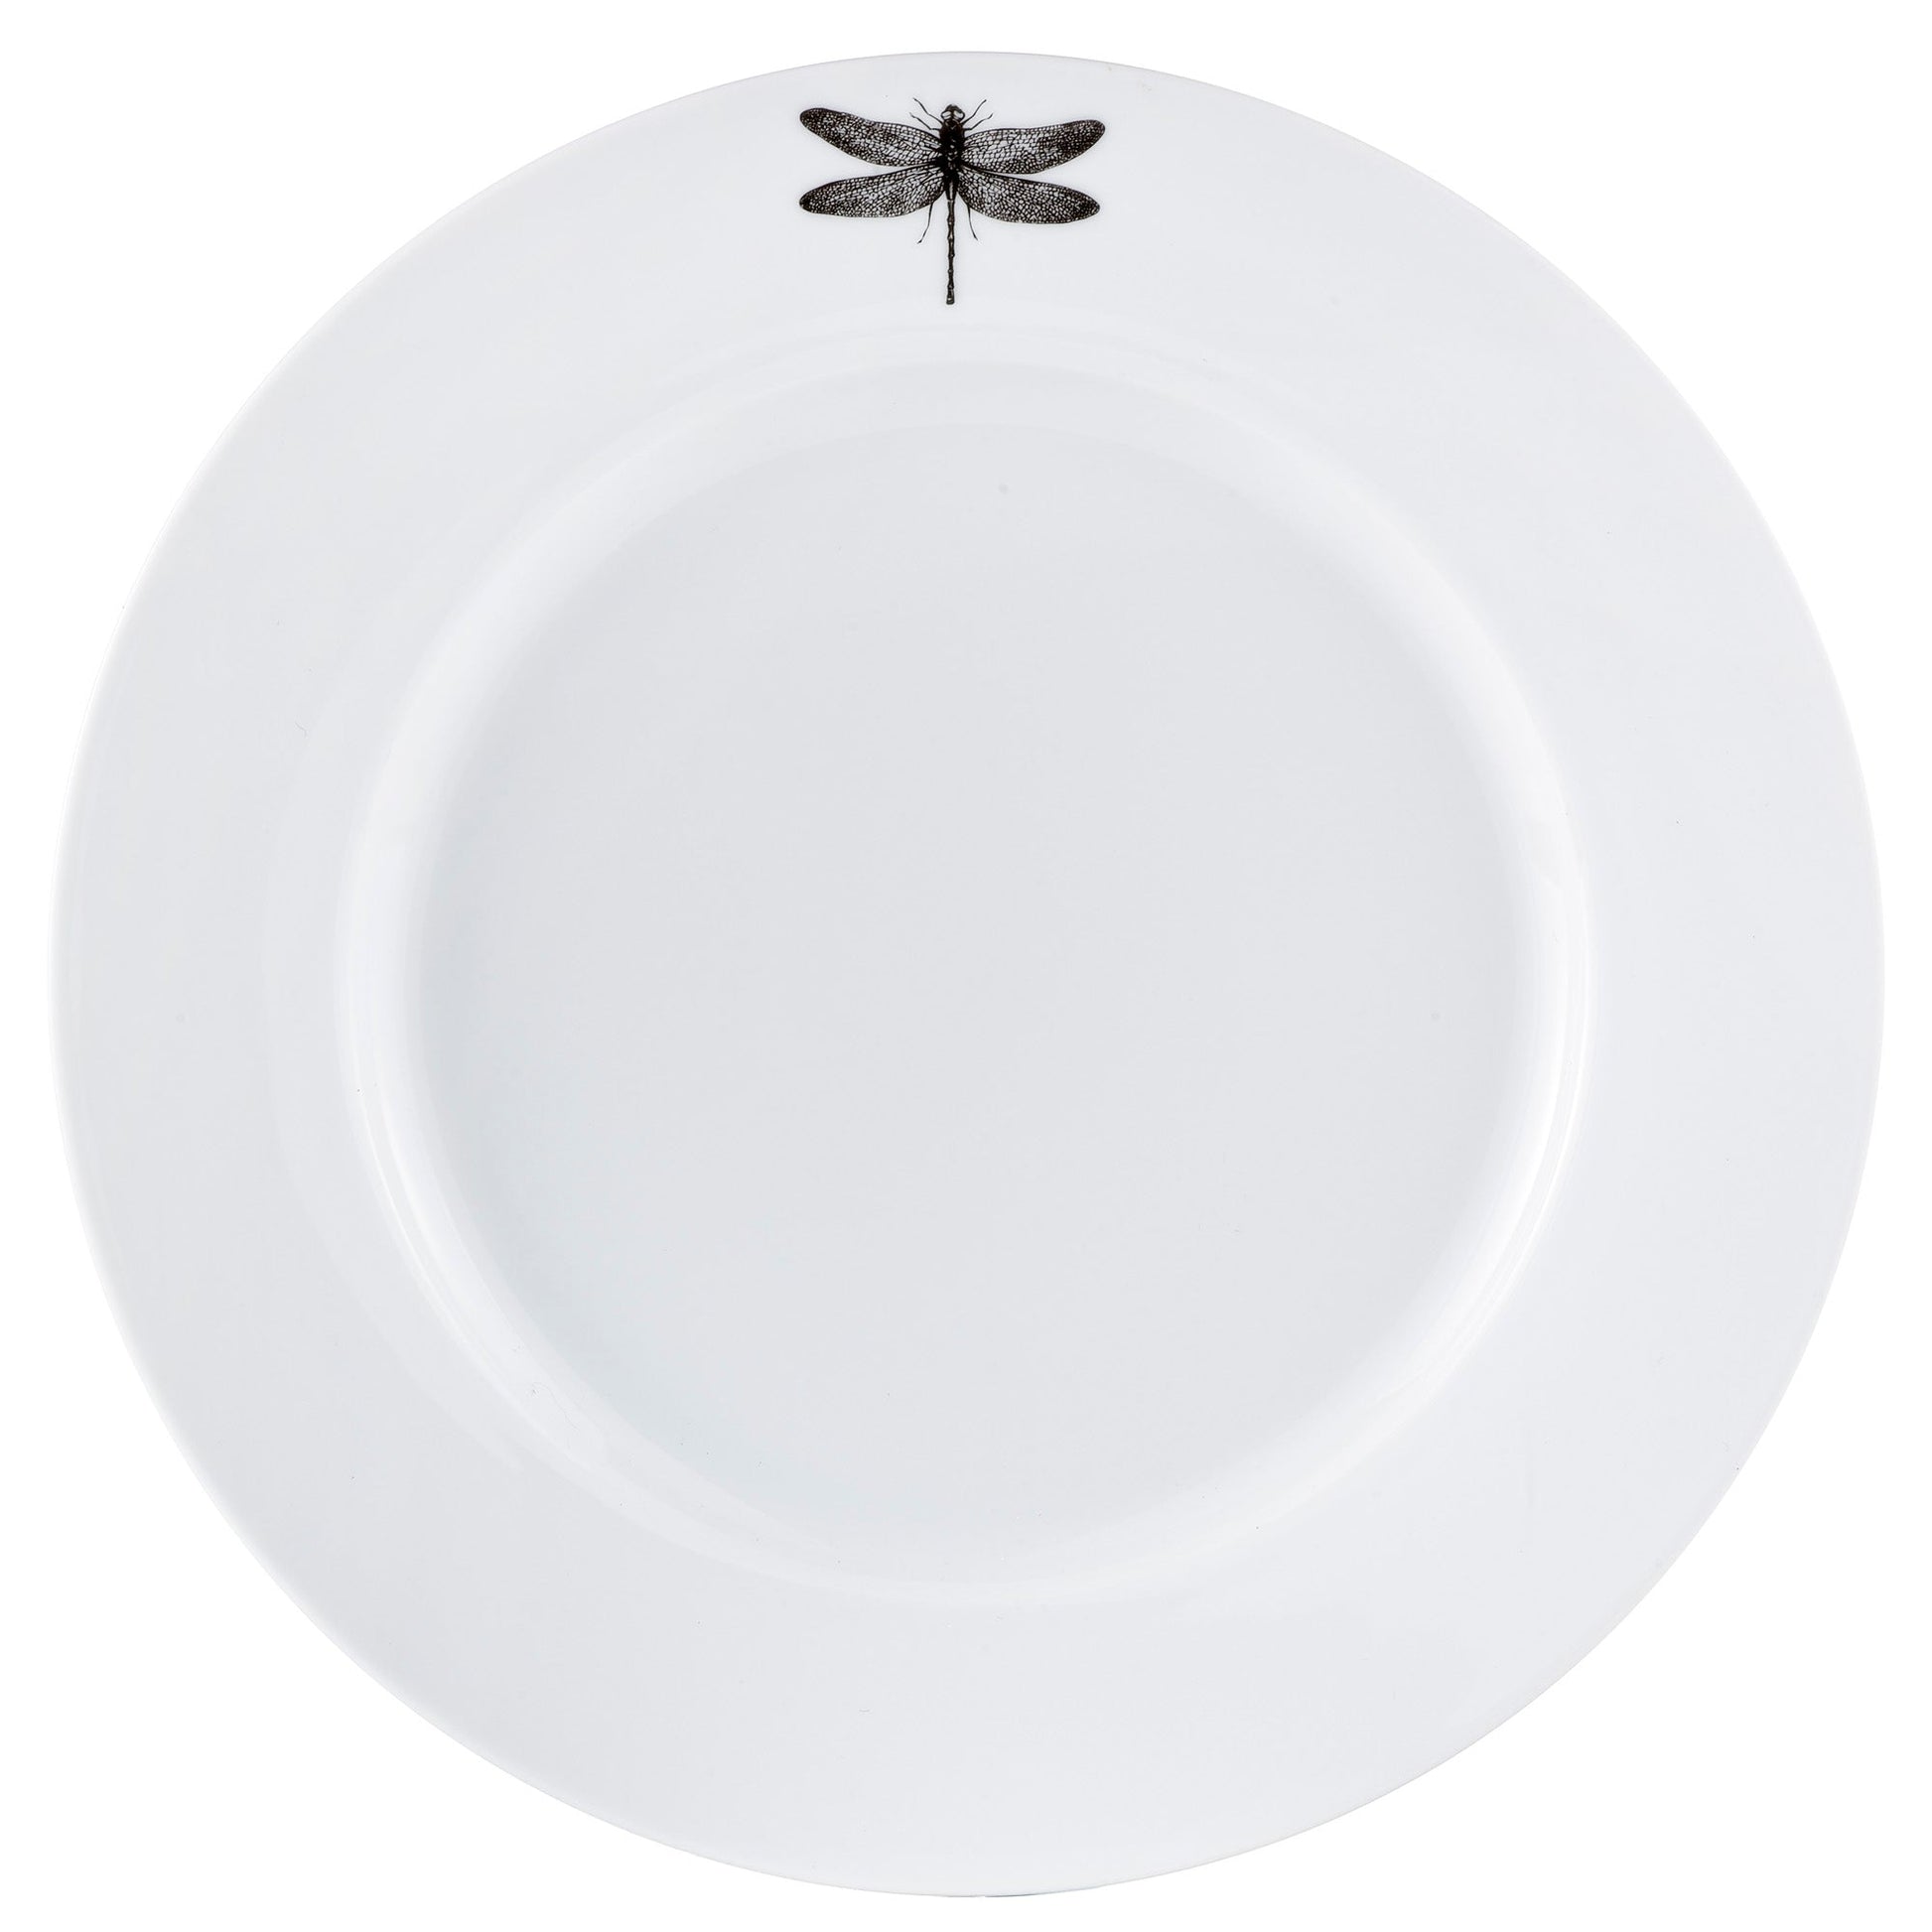 Dinnerware Set 16 Piece Dragonfly, Service for 4 - DecoElegance - Dinnerware Set